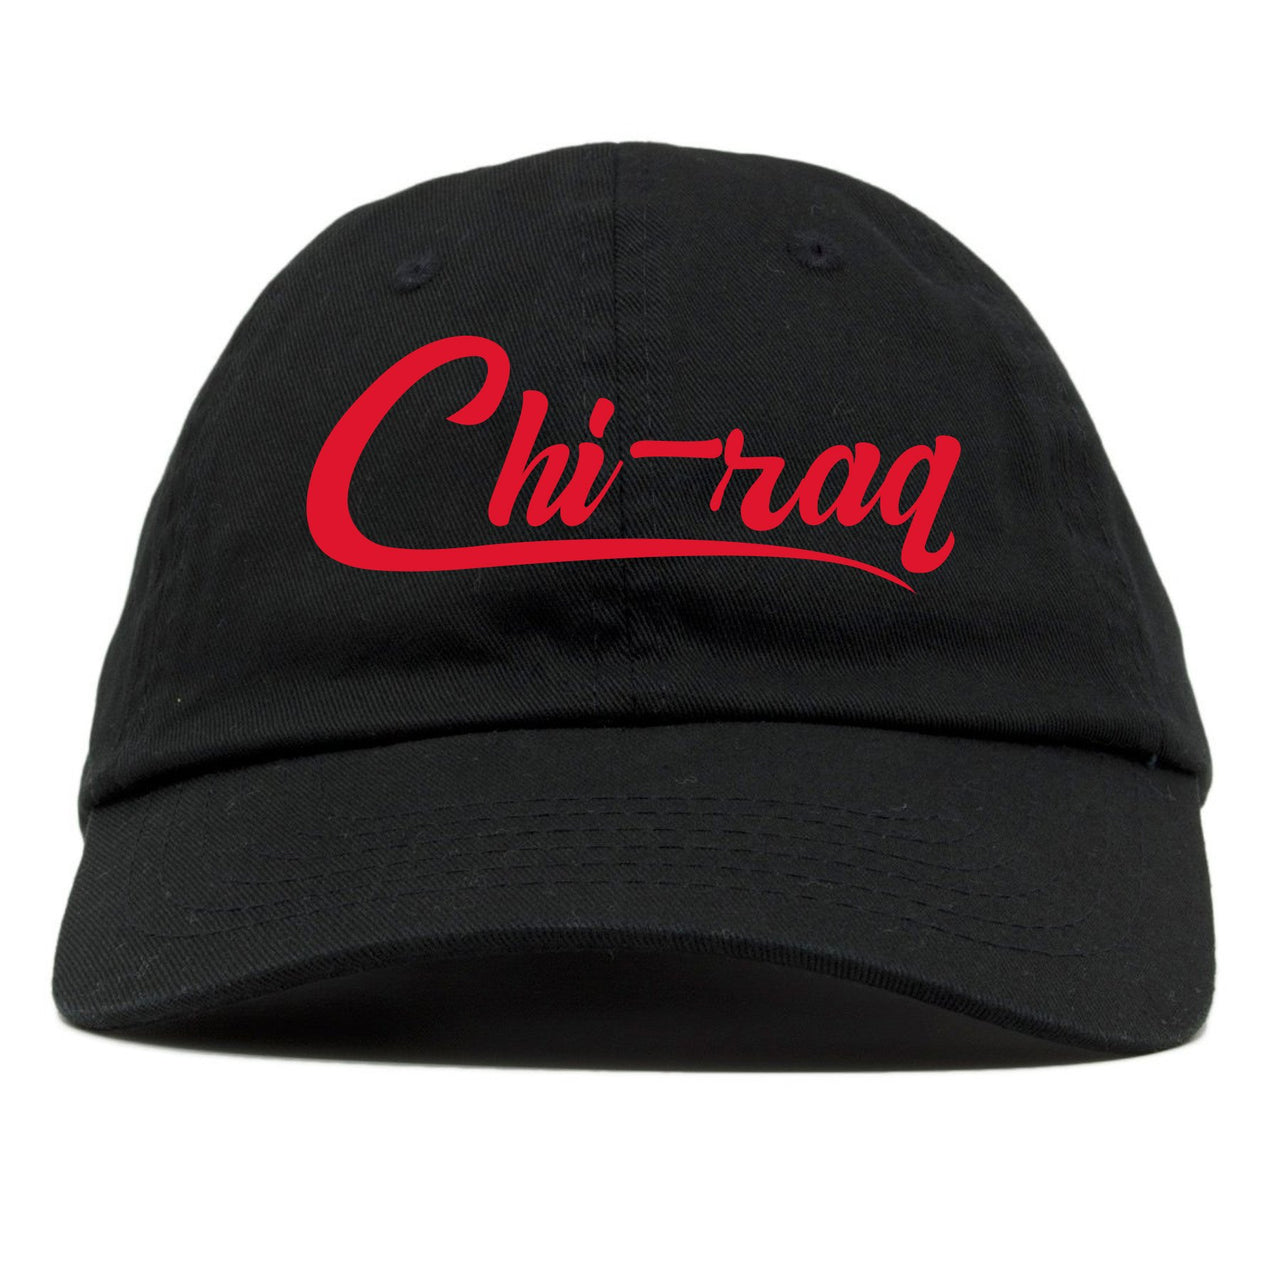 Reflections of a Champion 8s Dad Hat | Chiraq Script, Black